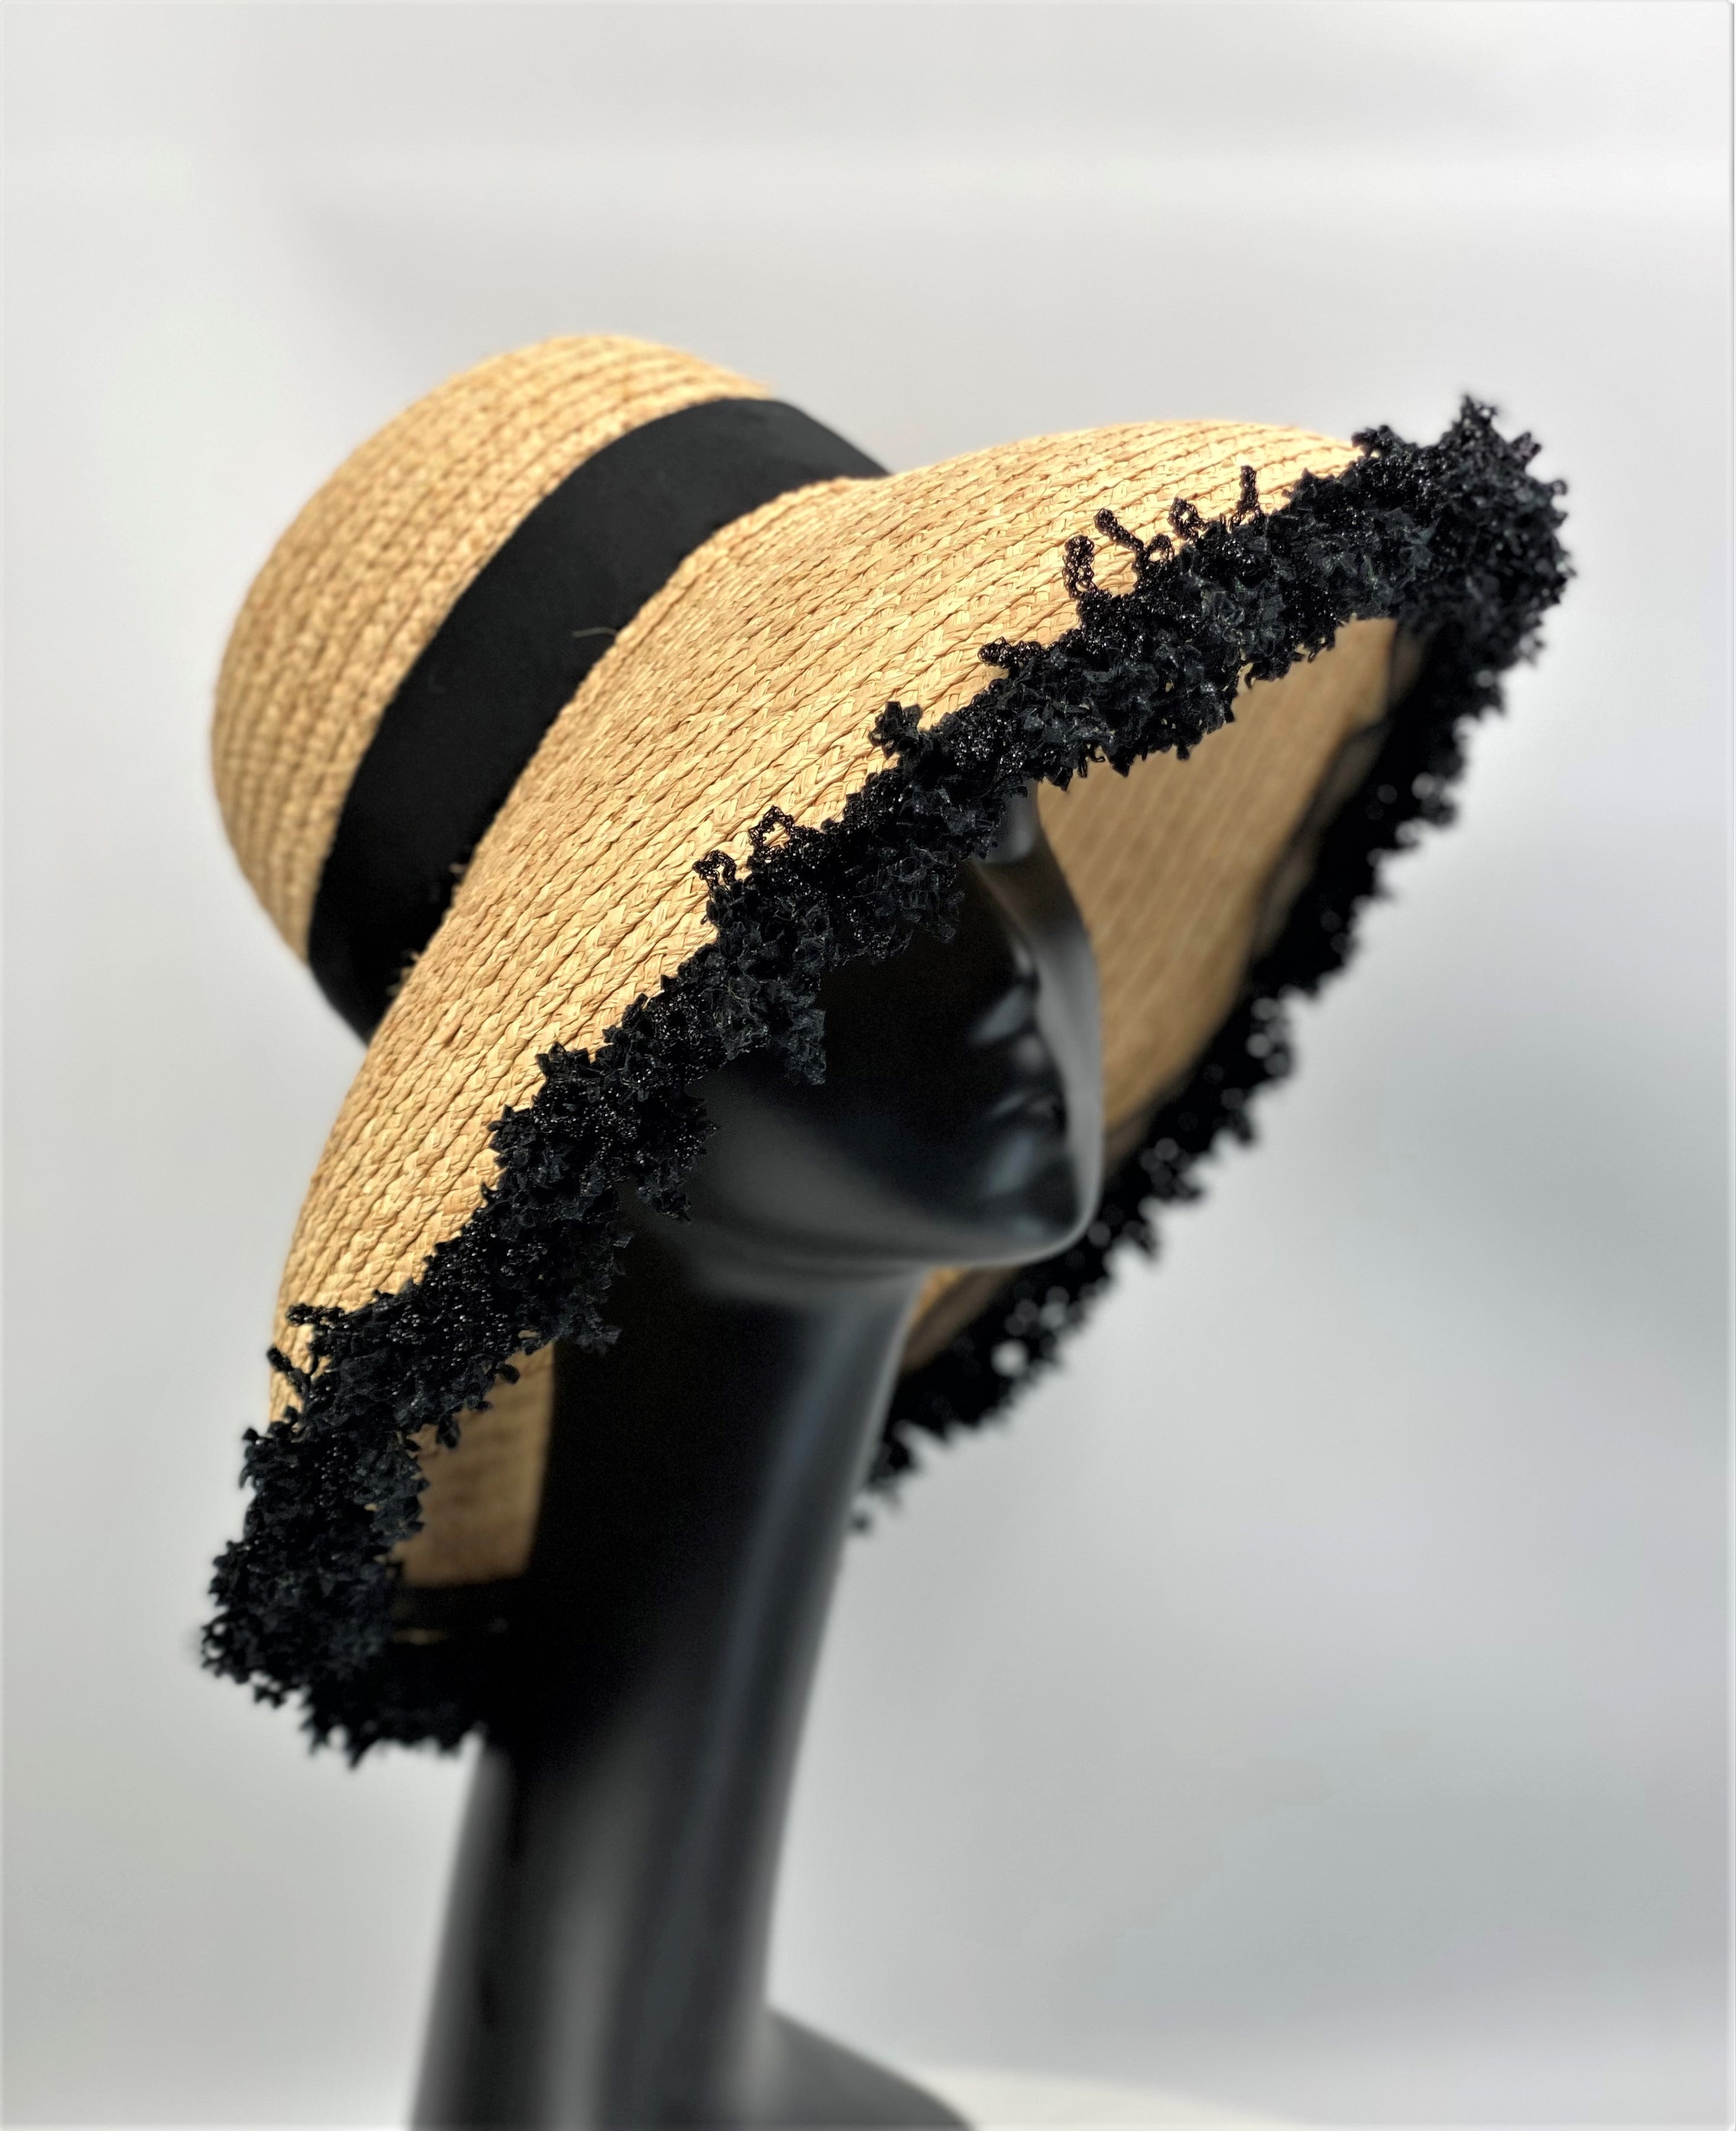 BECKY Natural Straw Sun Hat Large Dior Brim Black Trim